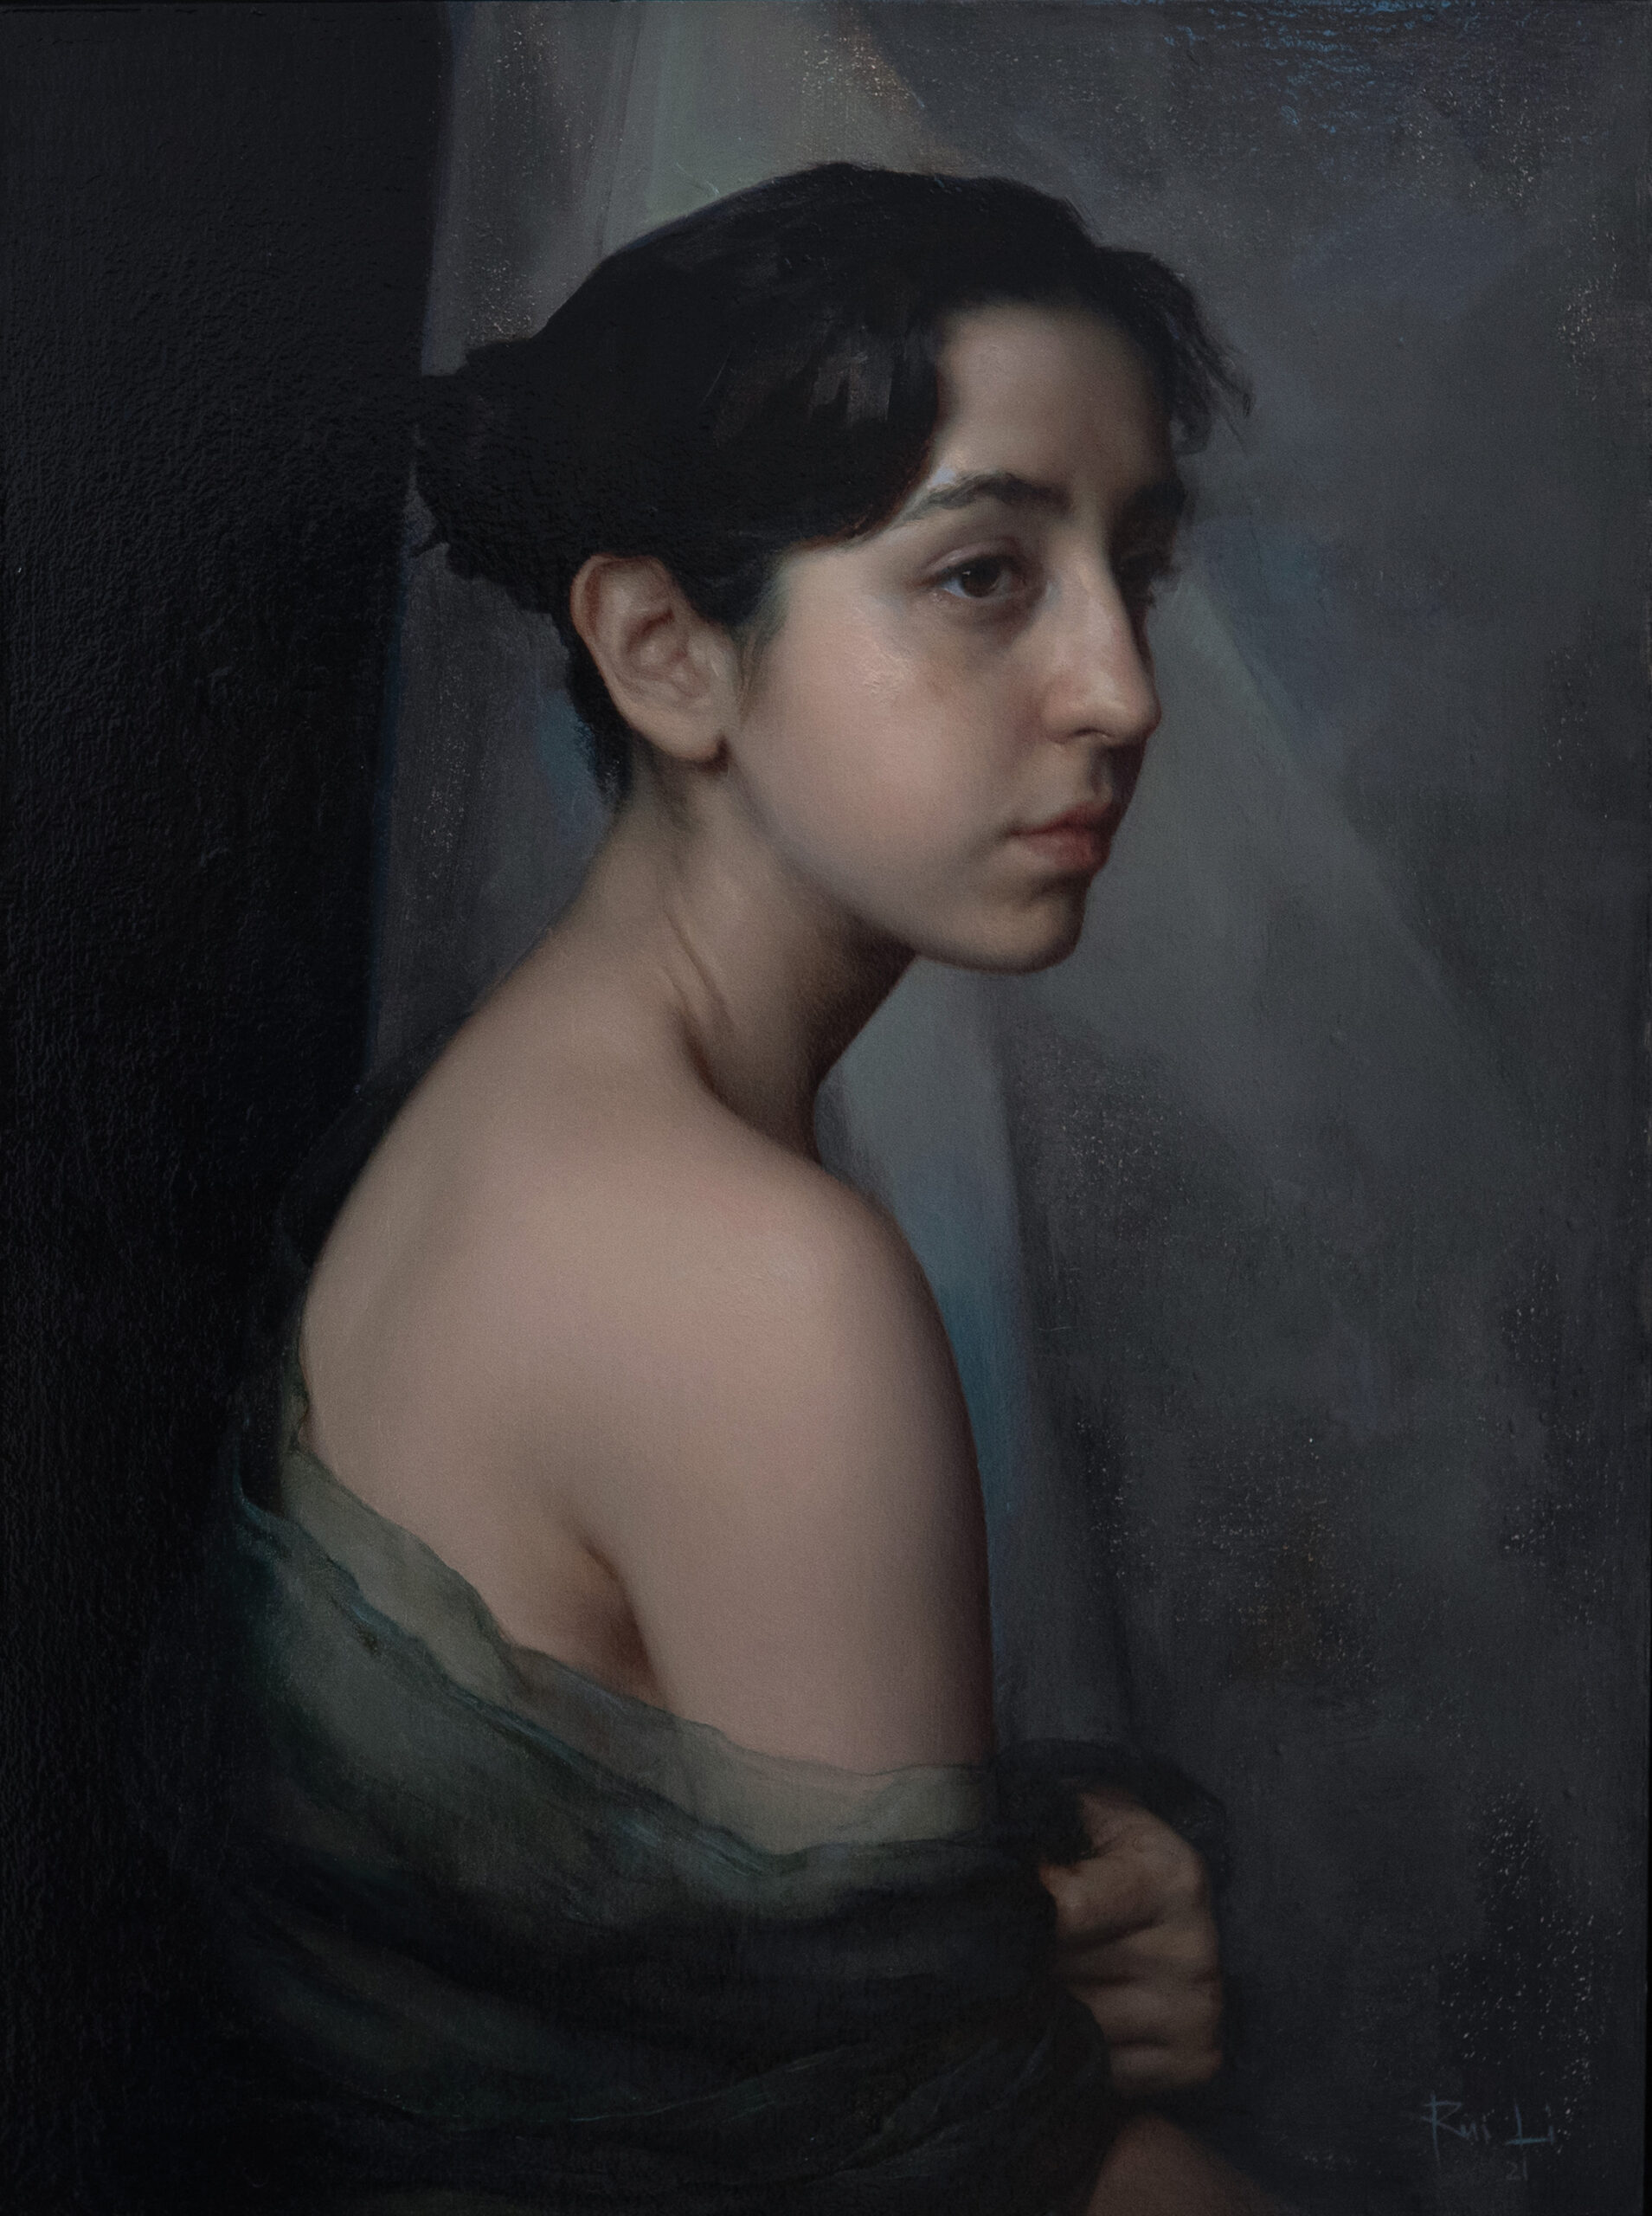 Rachel Li (b. 1995), "The Silk Wrap," 2022, oil on panel, 24 x 18 in., permanent collection of the New Salem Museum & Academy of Fine Art (Massachusetts)